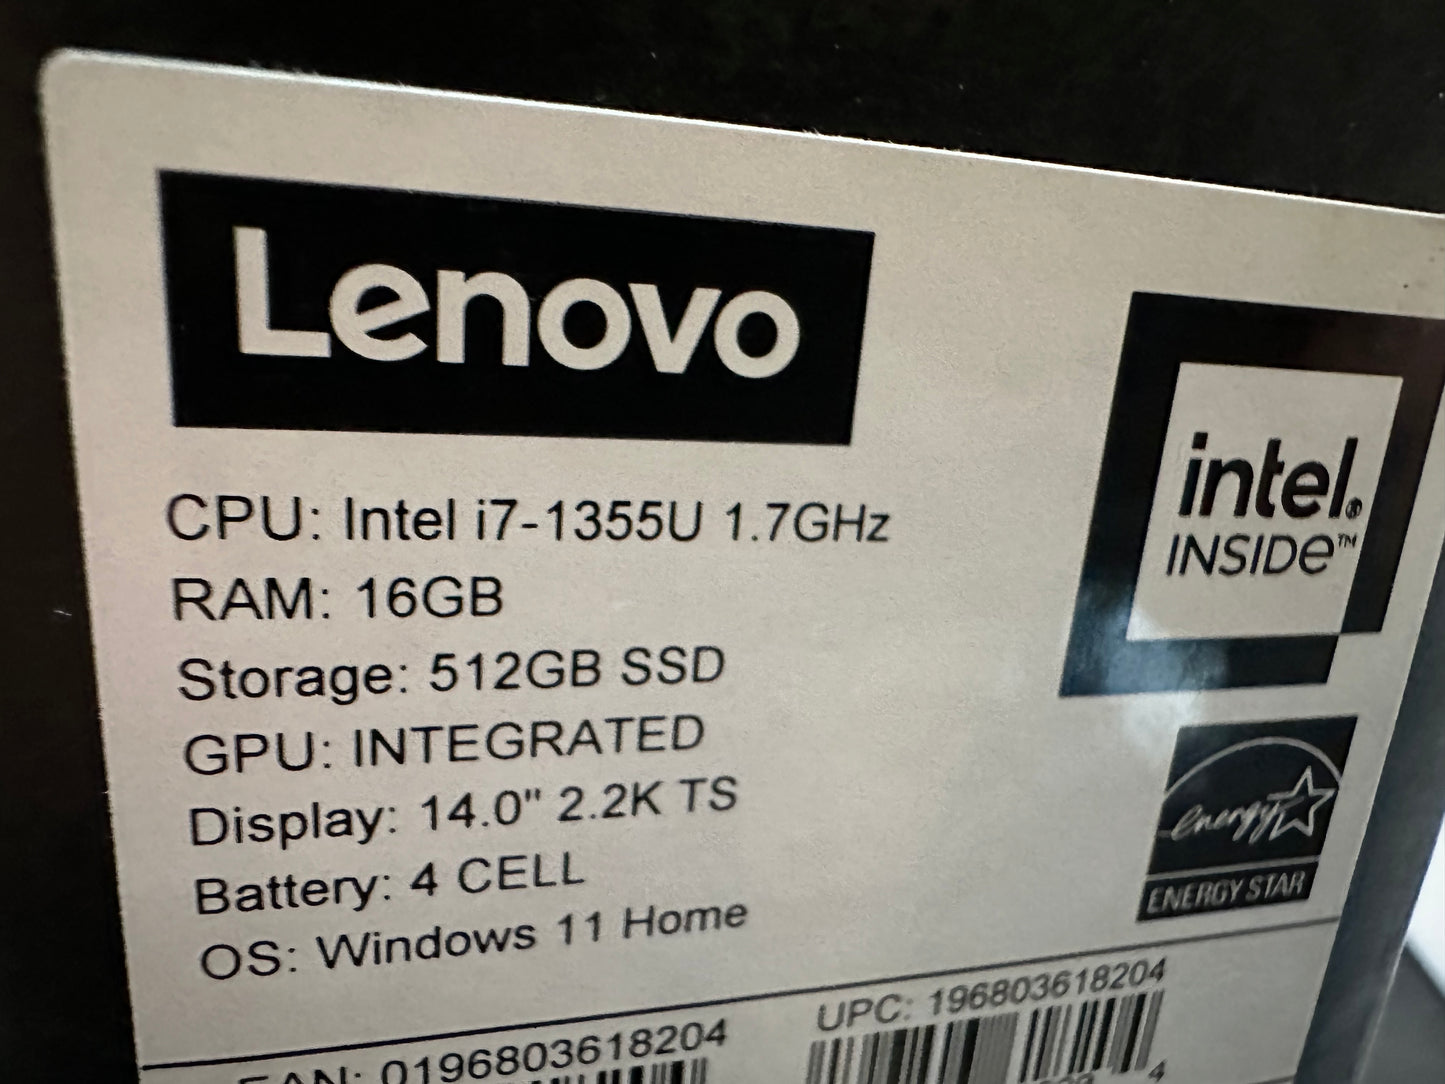 Lenovo yoga 7i Intel i7-1355U 1.7GHz RAM: 16GB: 512GB SSD
Display: 14.0" 2.2K TS